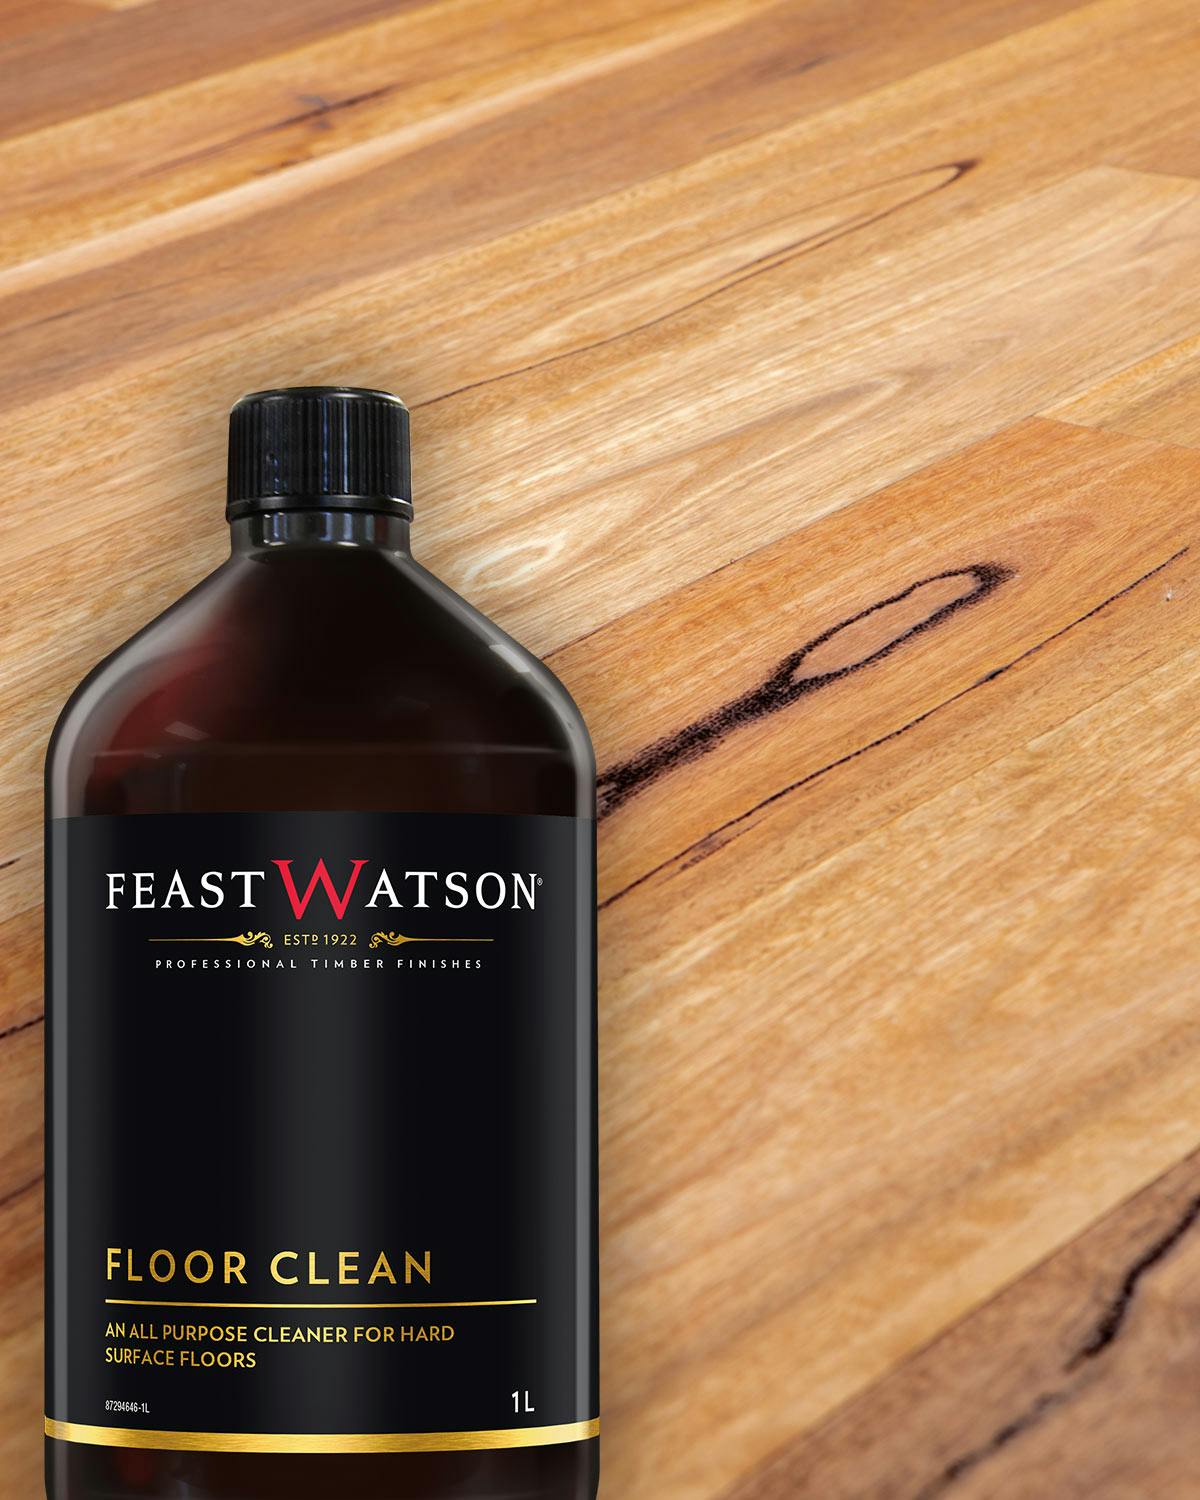 Feast Watson Floor Clean